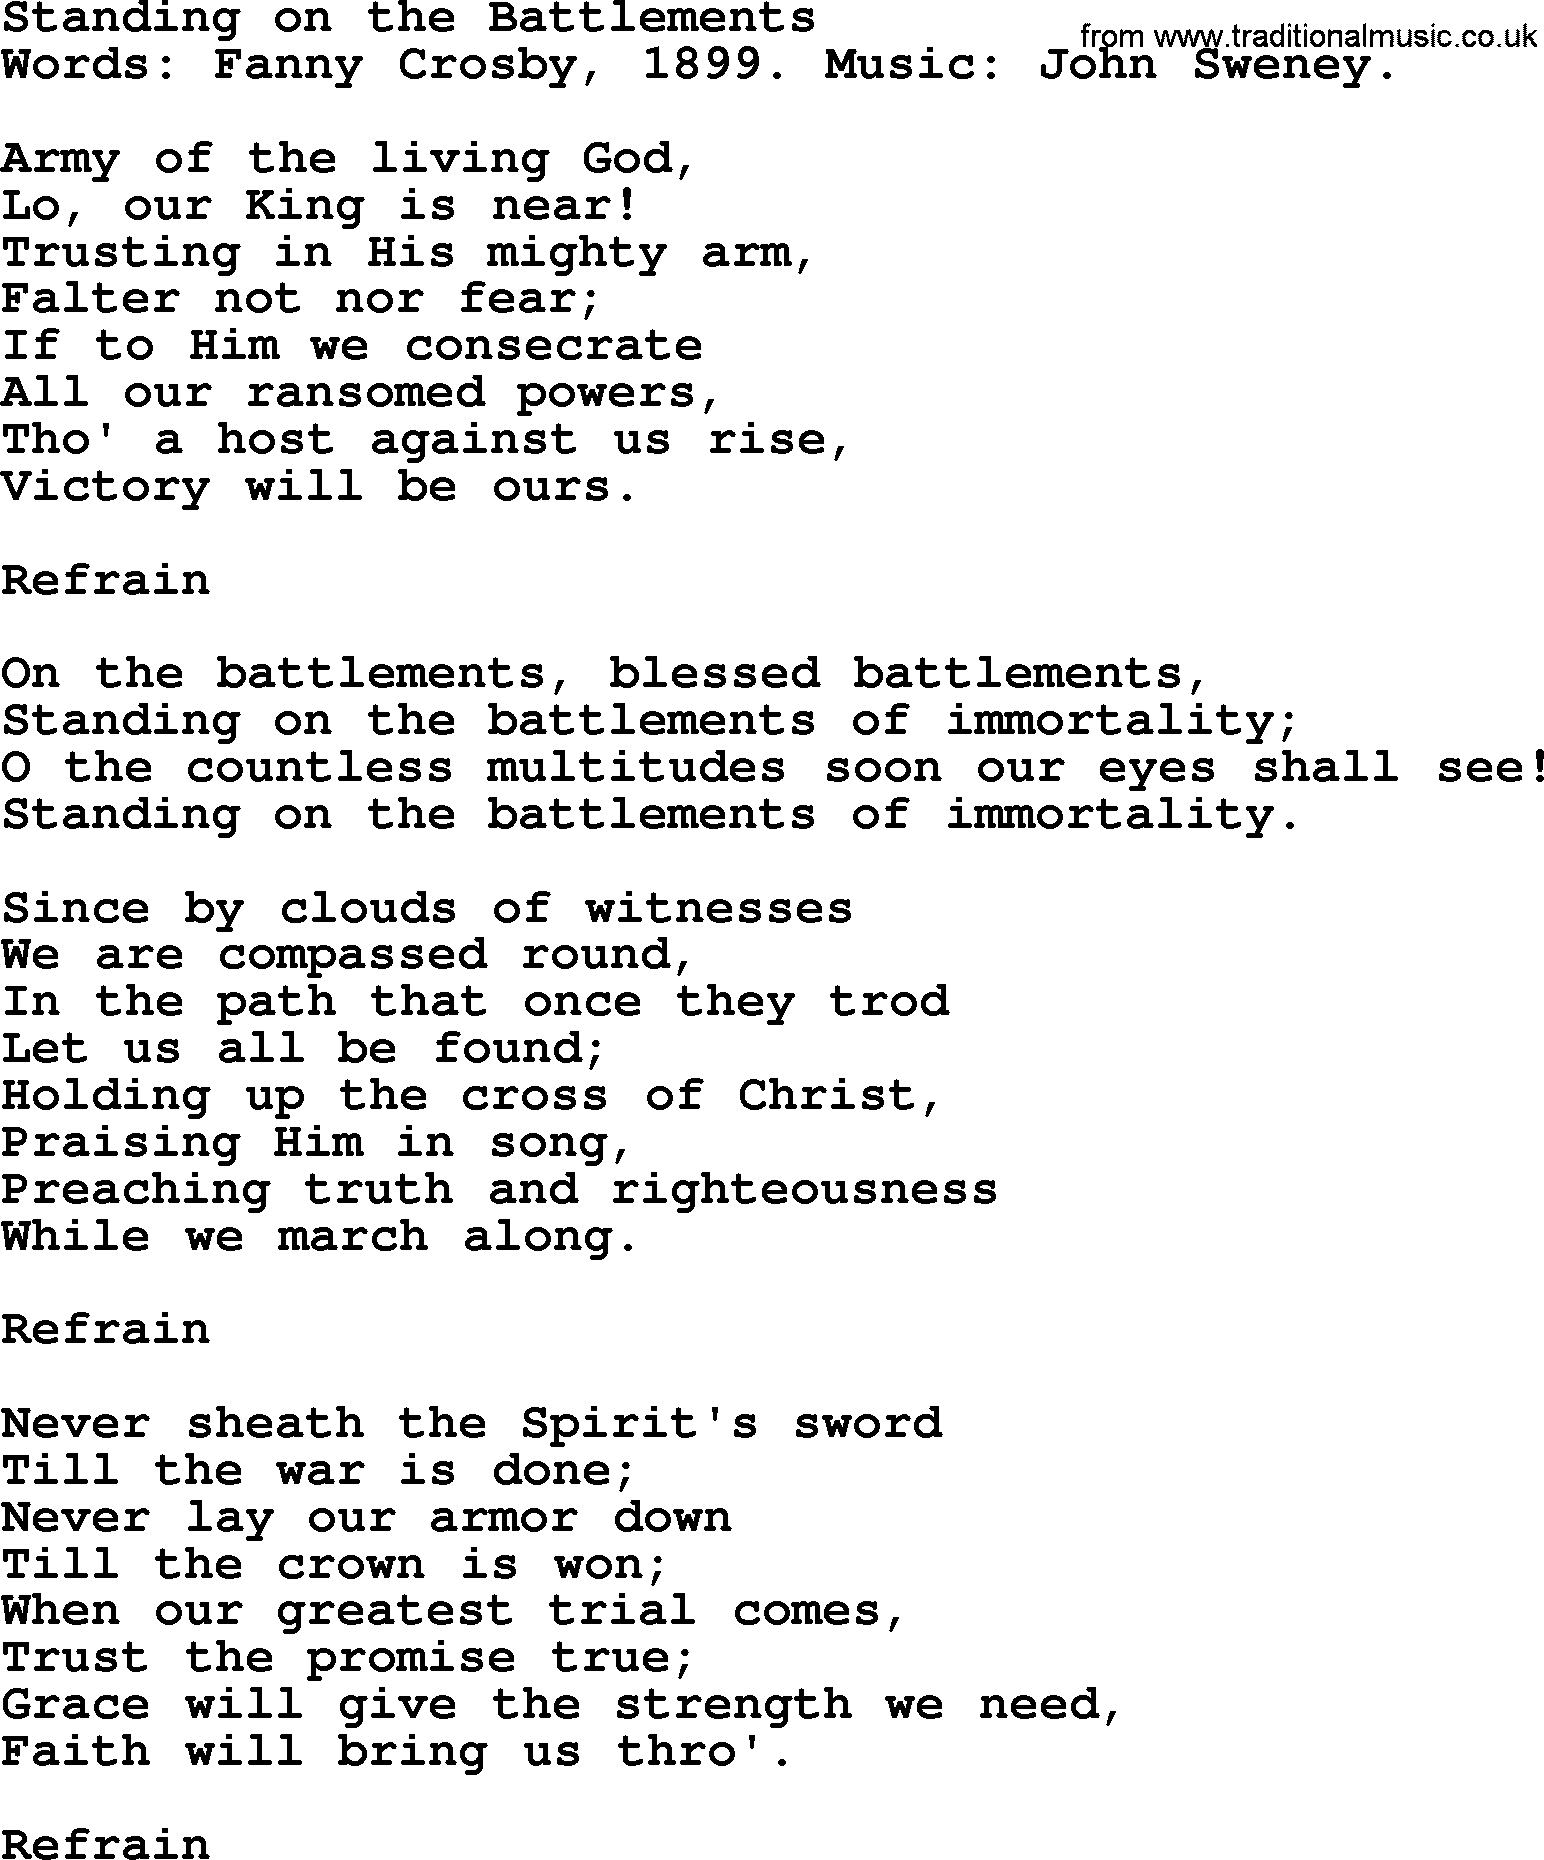 Fanny Crosby song: Standing On The Battlements, lyrics